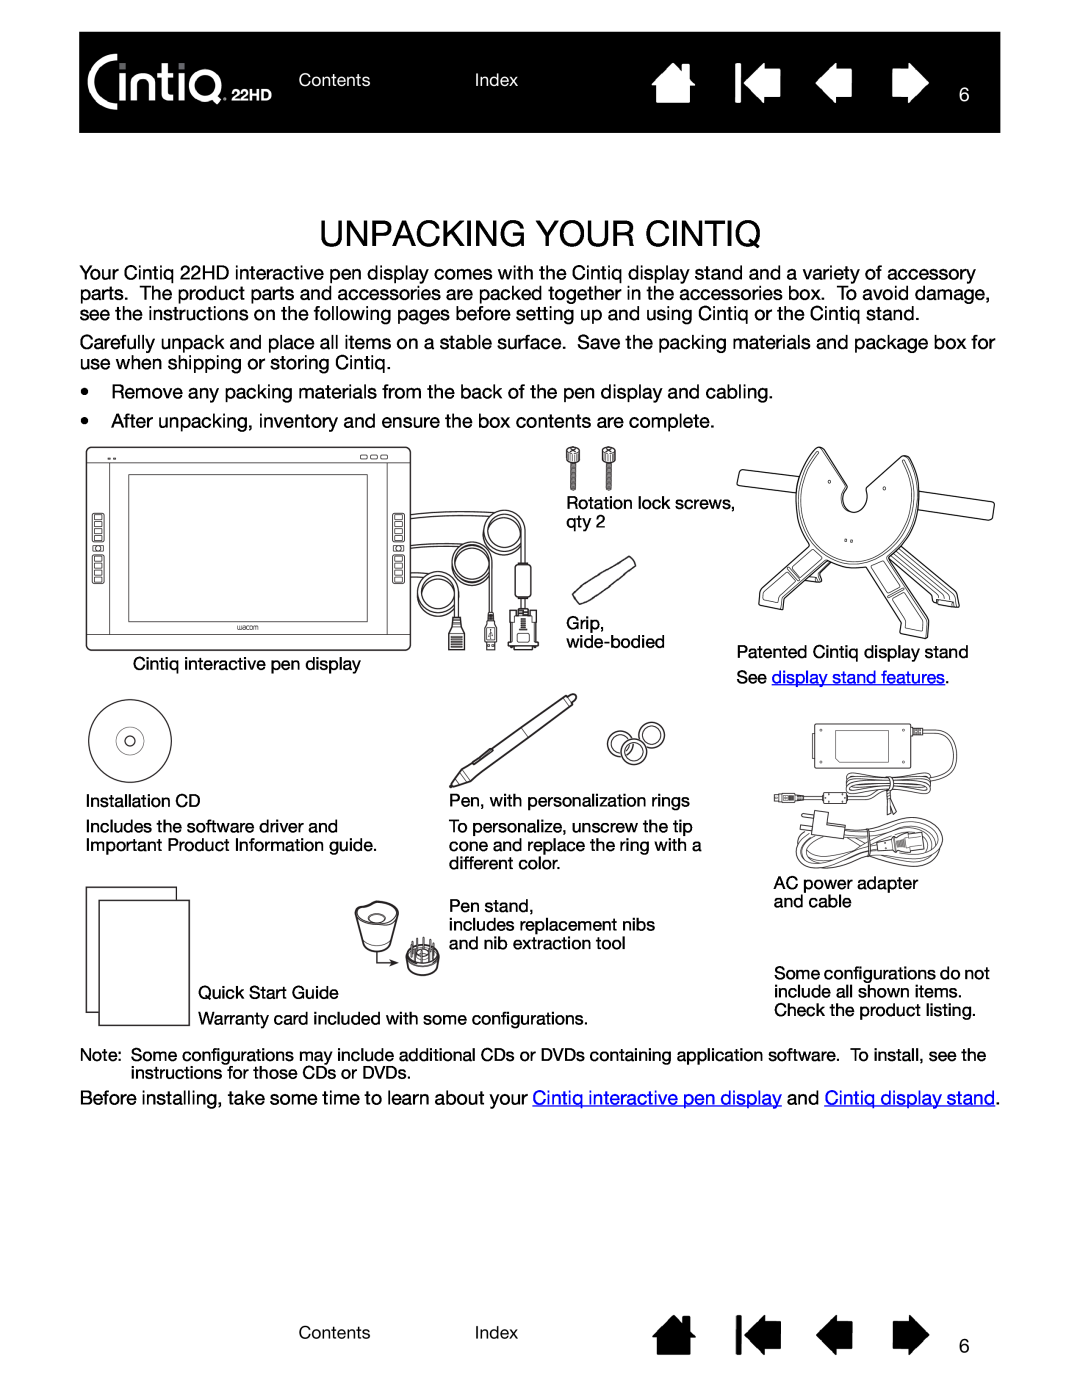 Wacom DTK-2200 user manual Unpacking Your Cintiq 